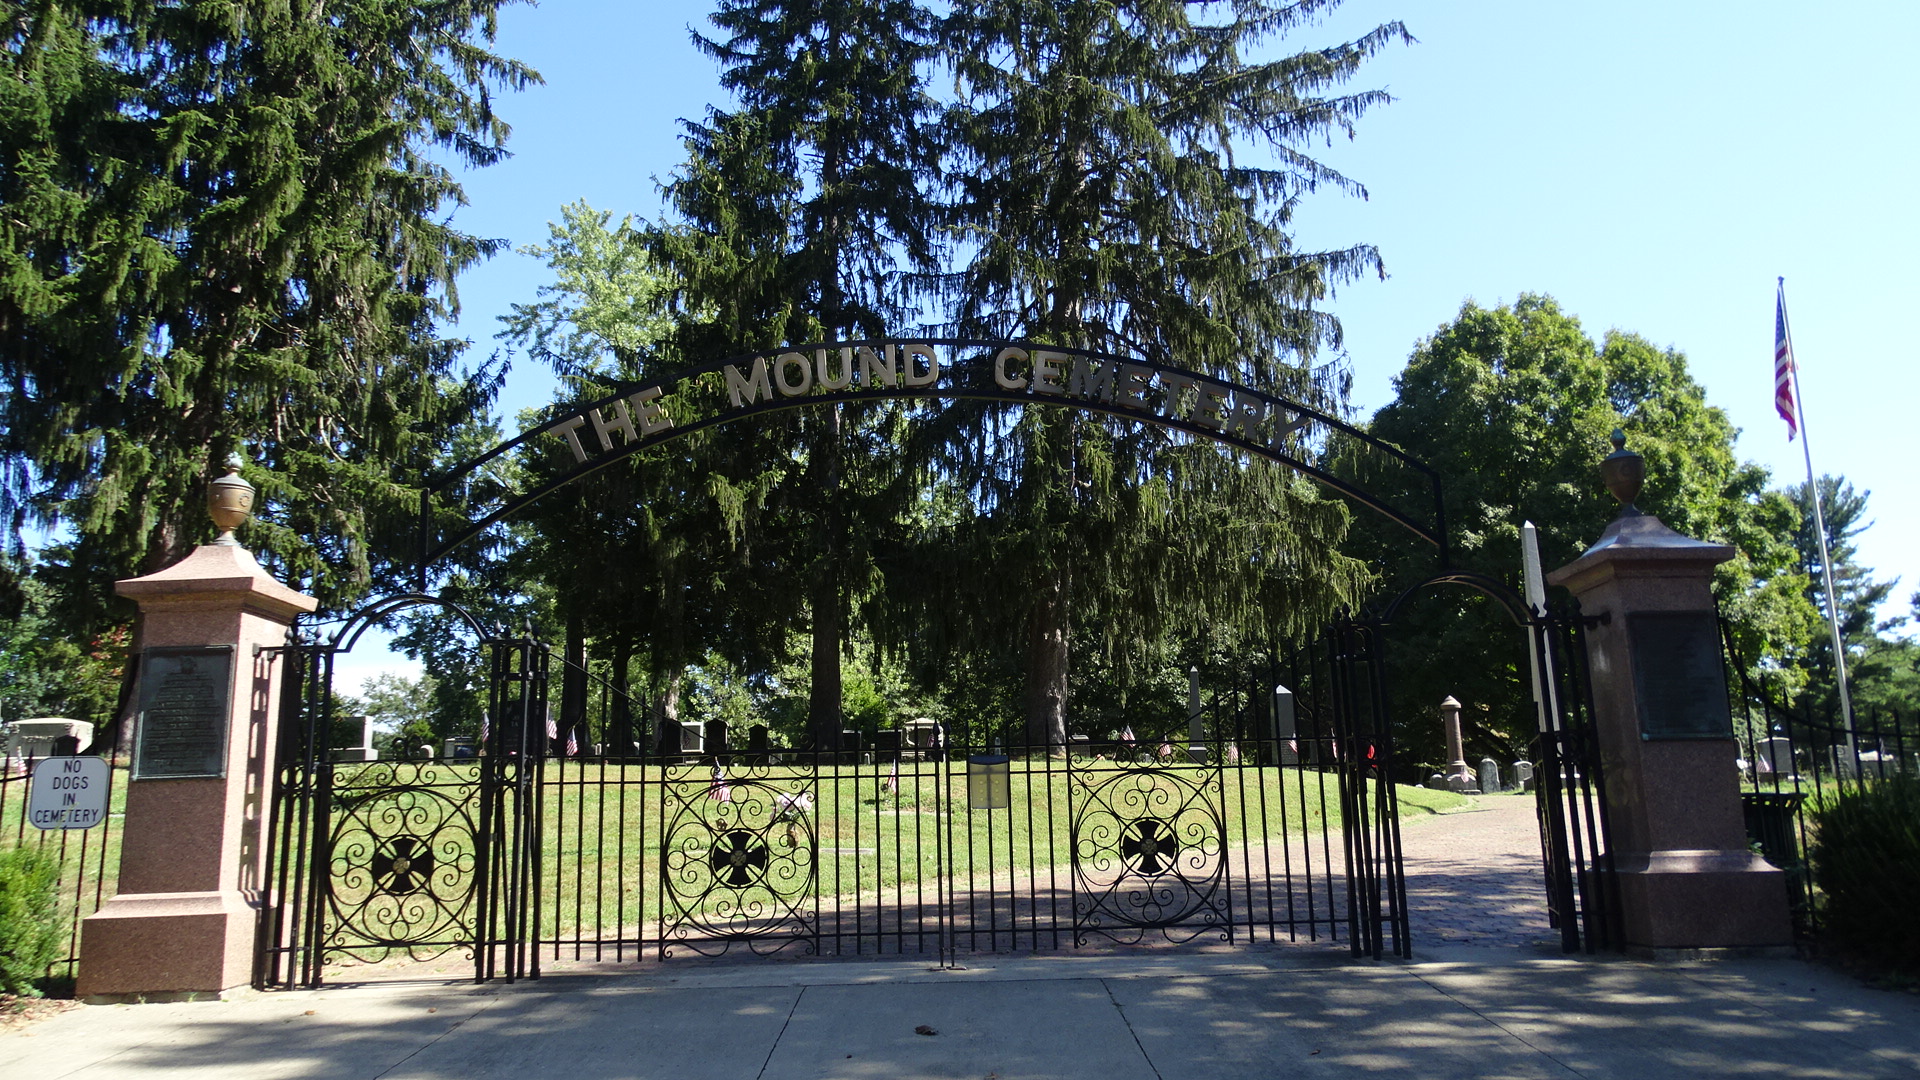 Mound Cemetery Marietta Ohio